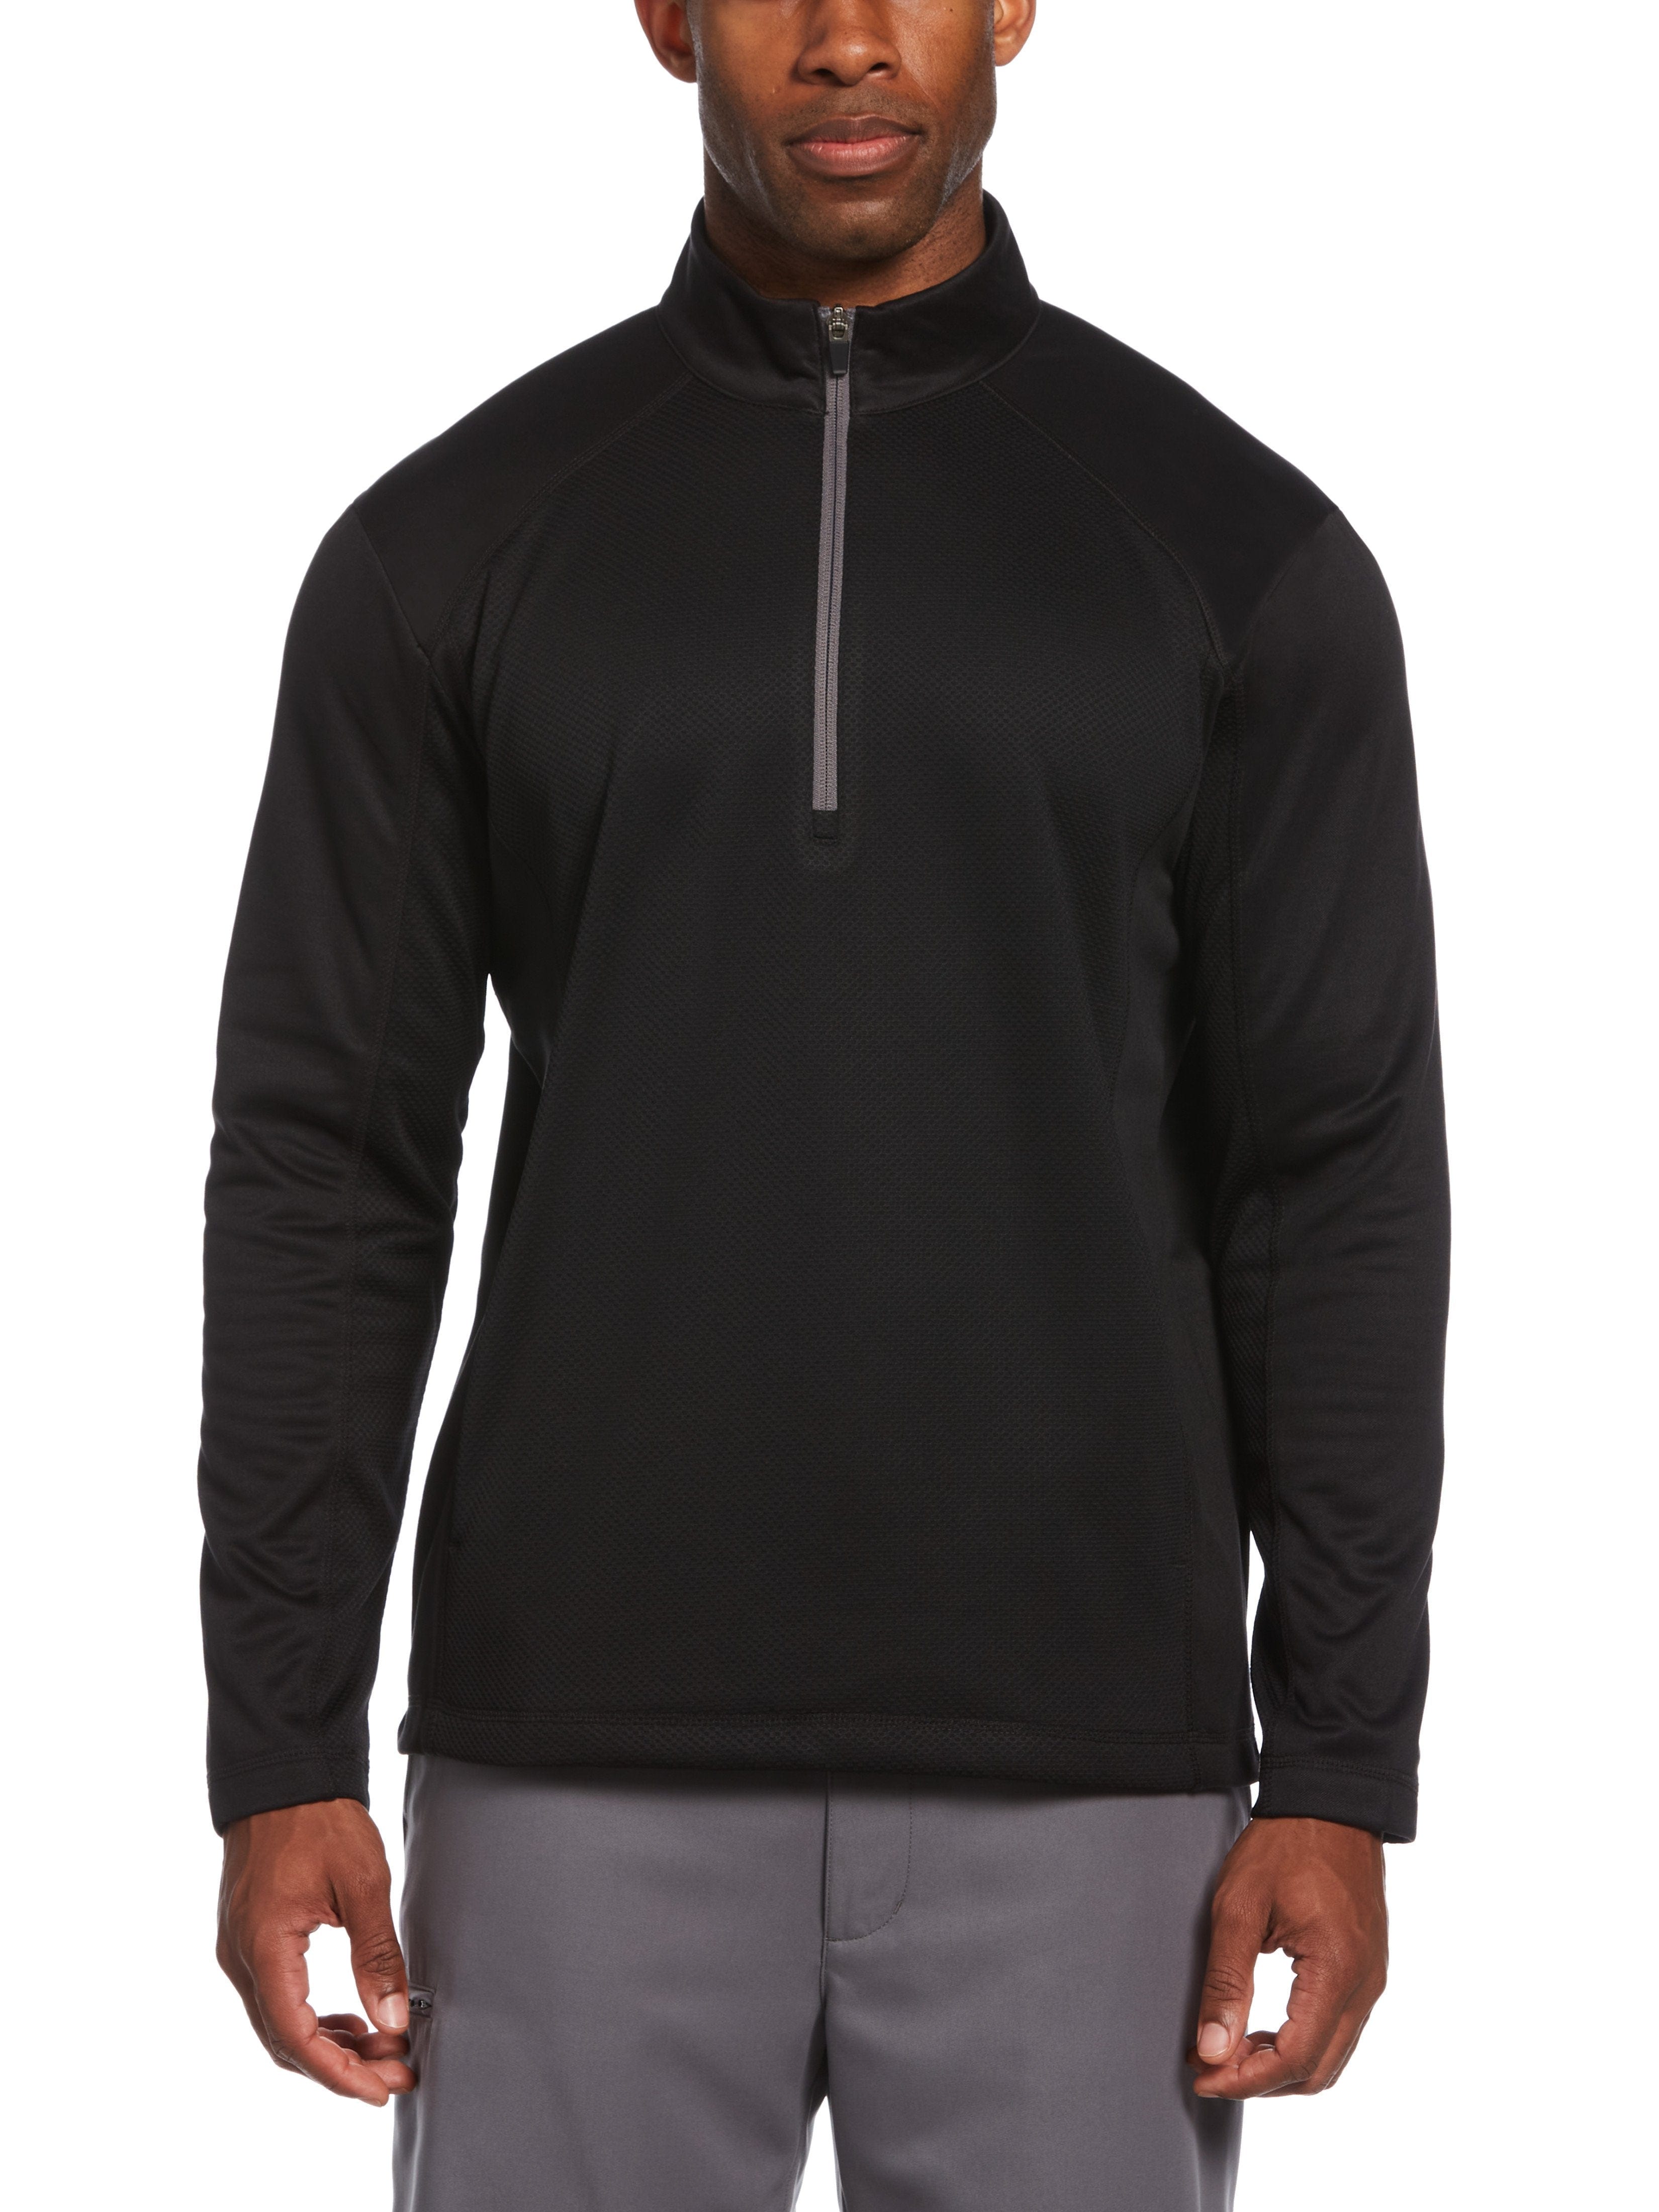 PGA TOUR Apparel Mens Mixed Texture Fleece 1/4 Zip Golf Jacket Top, Size Small, Black, 100% Polyester | Golf Apparel Shop